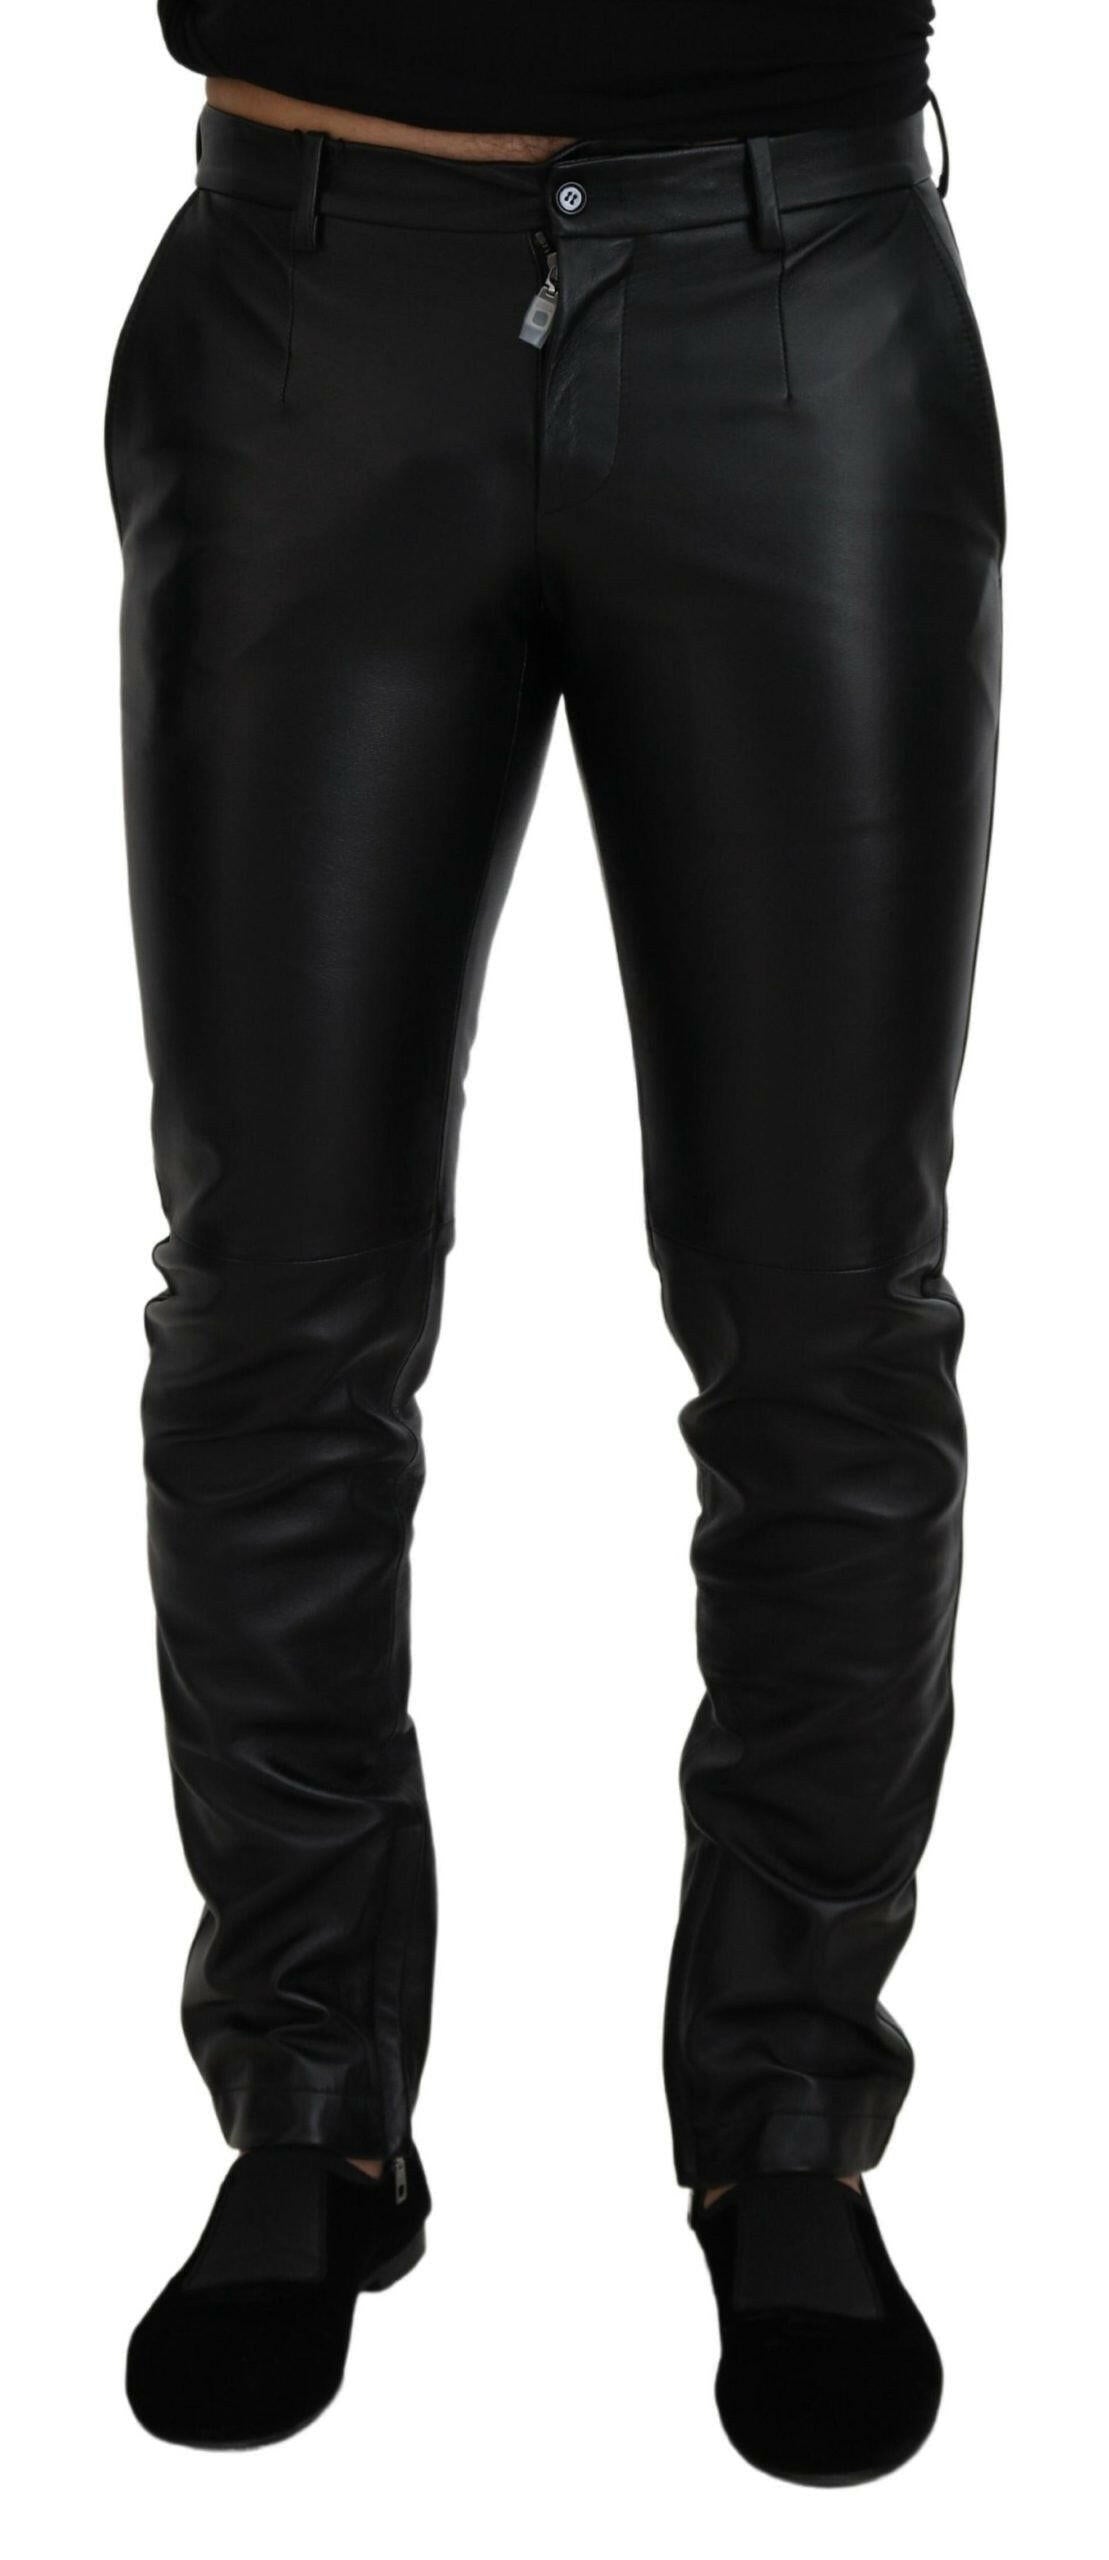 Dolce & Gabbana Black Shiny Stretch Skinny Pants - GENUINE AUTHENTIC BRAND LLC  